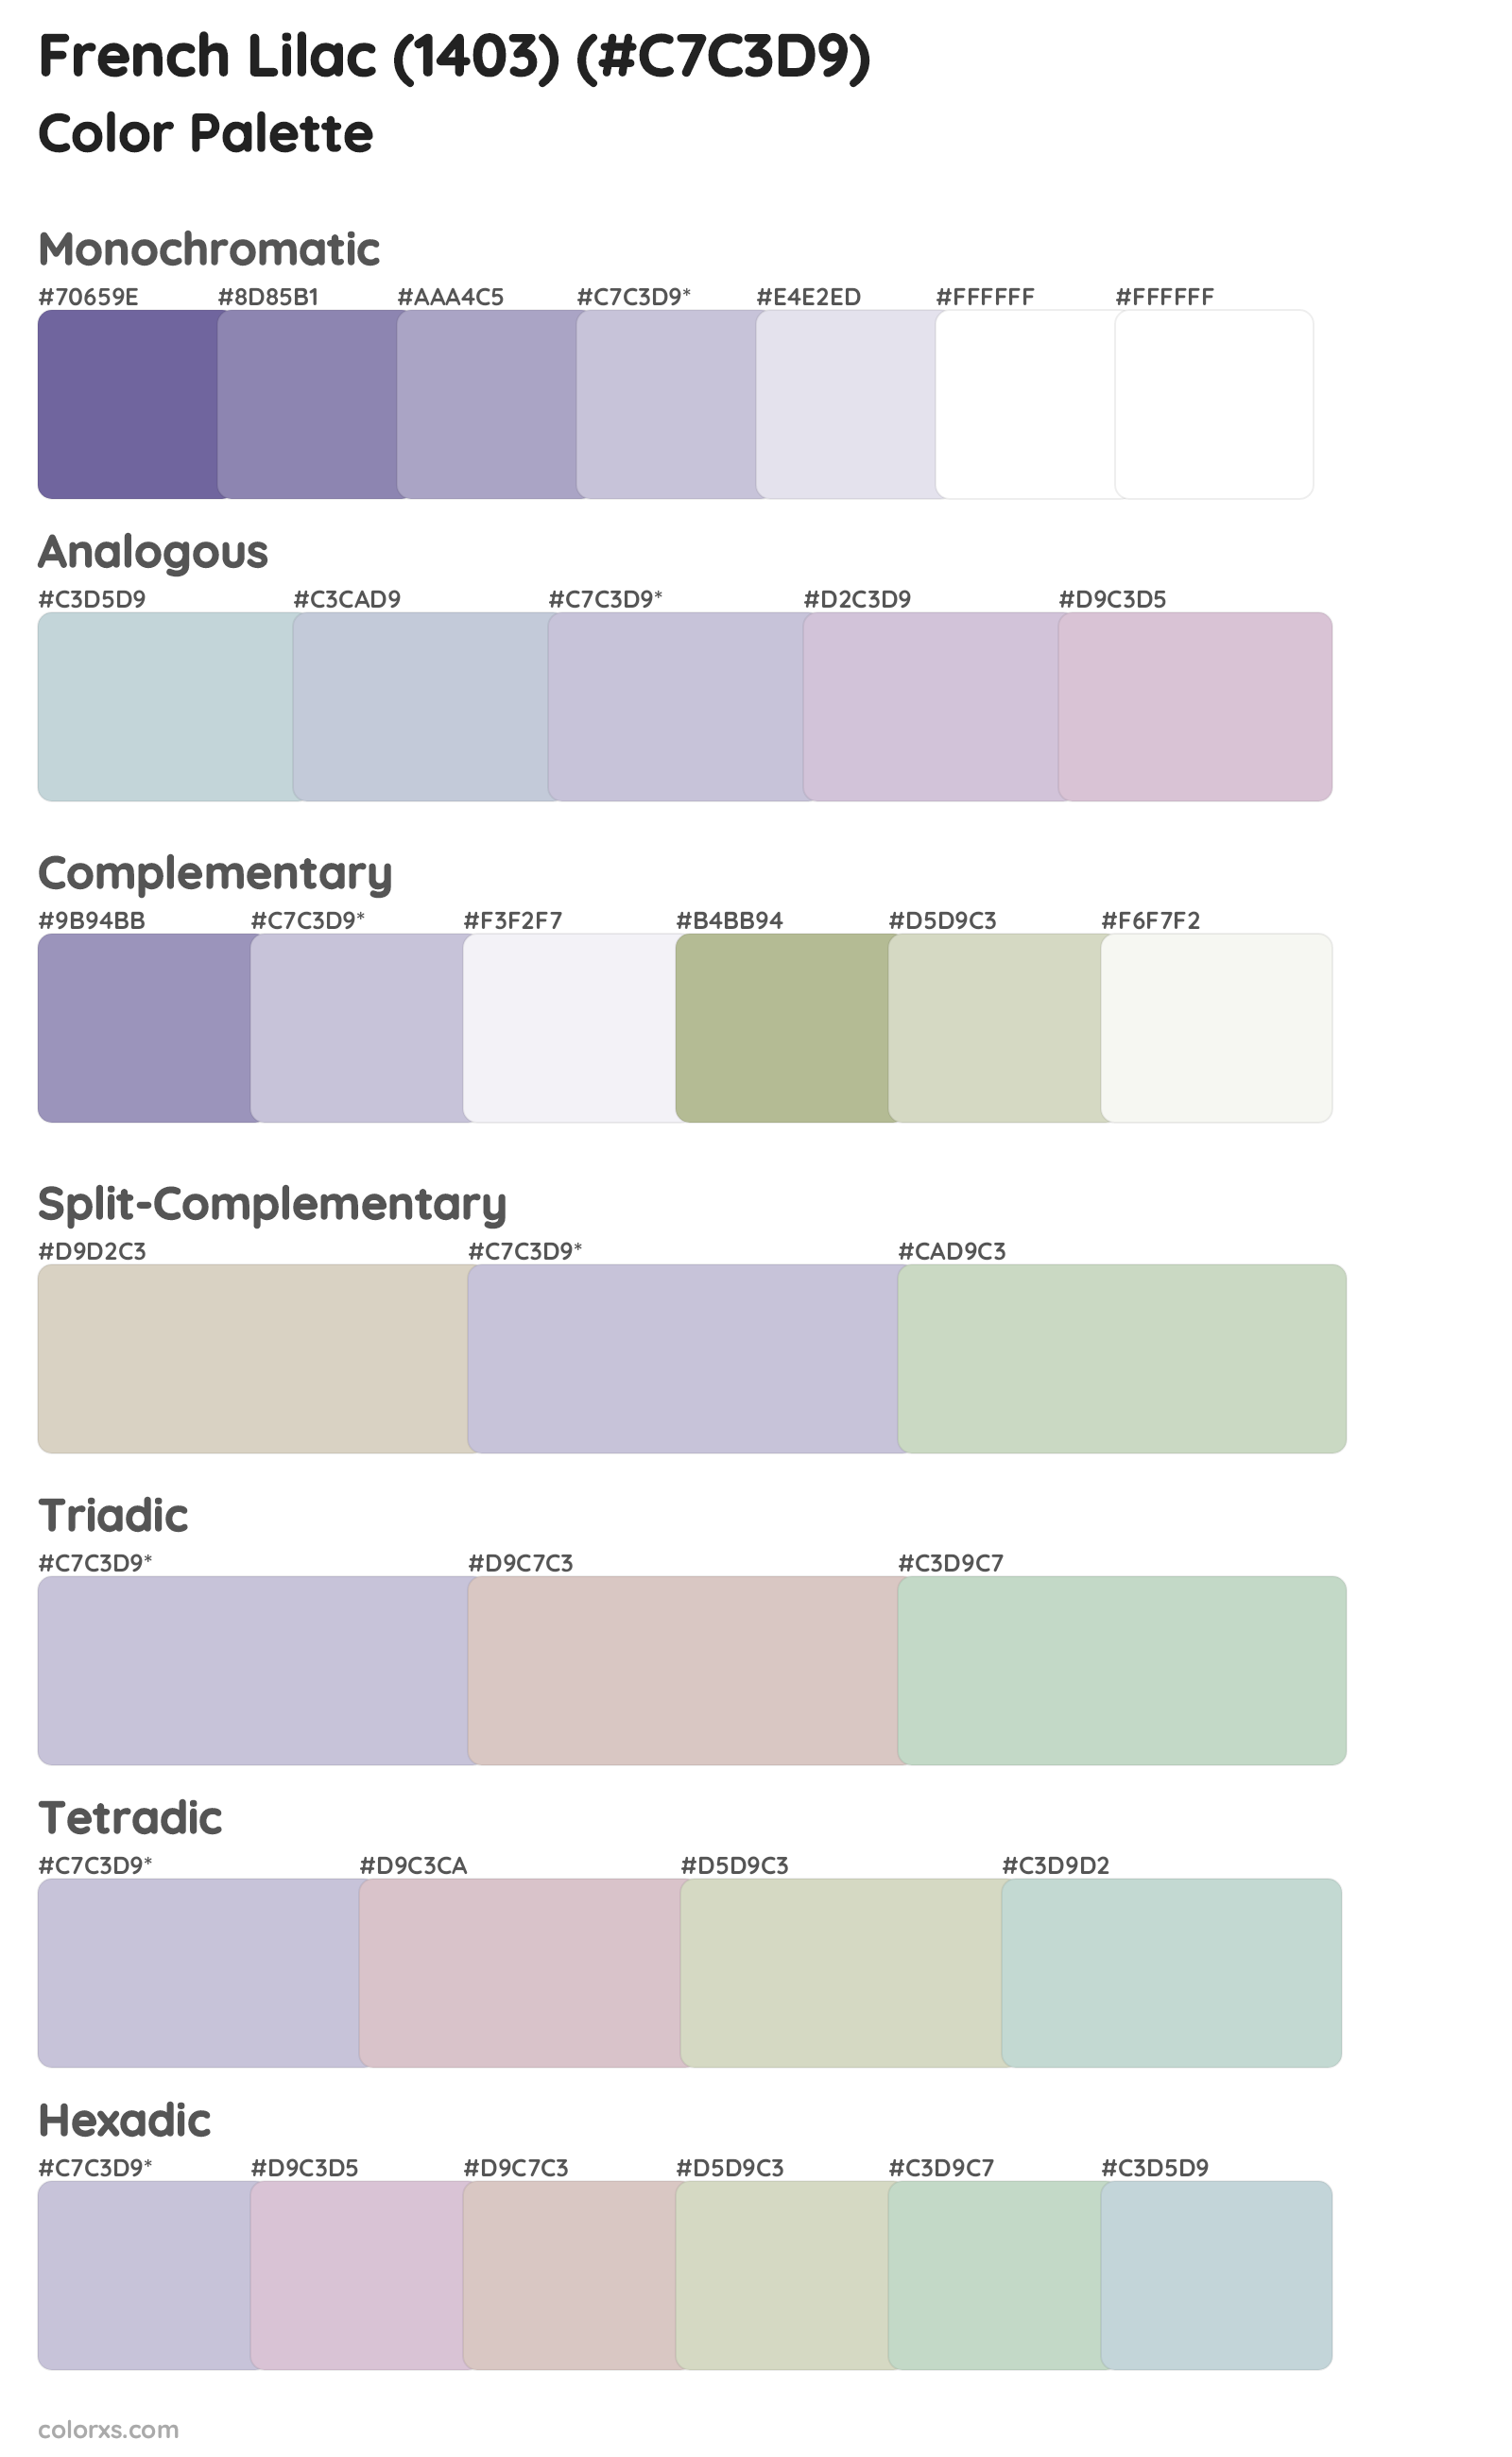 French Lilac (1403) Color Scheme Palettes